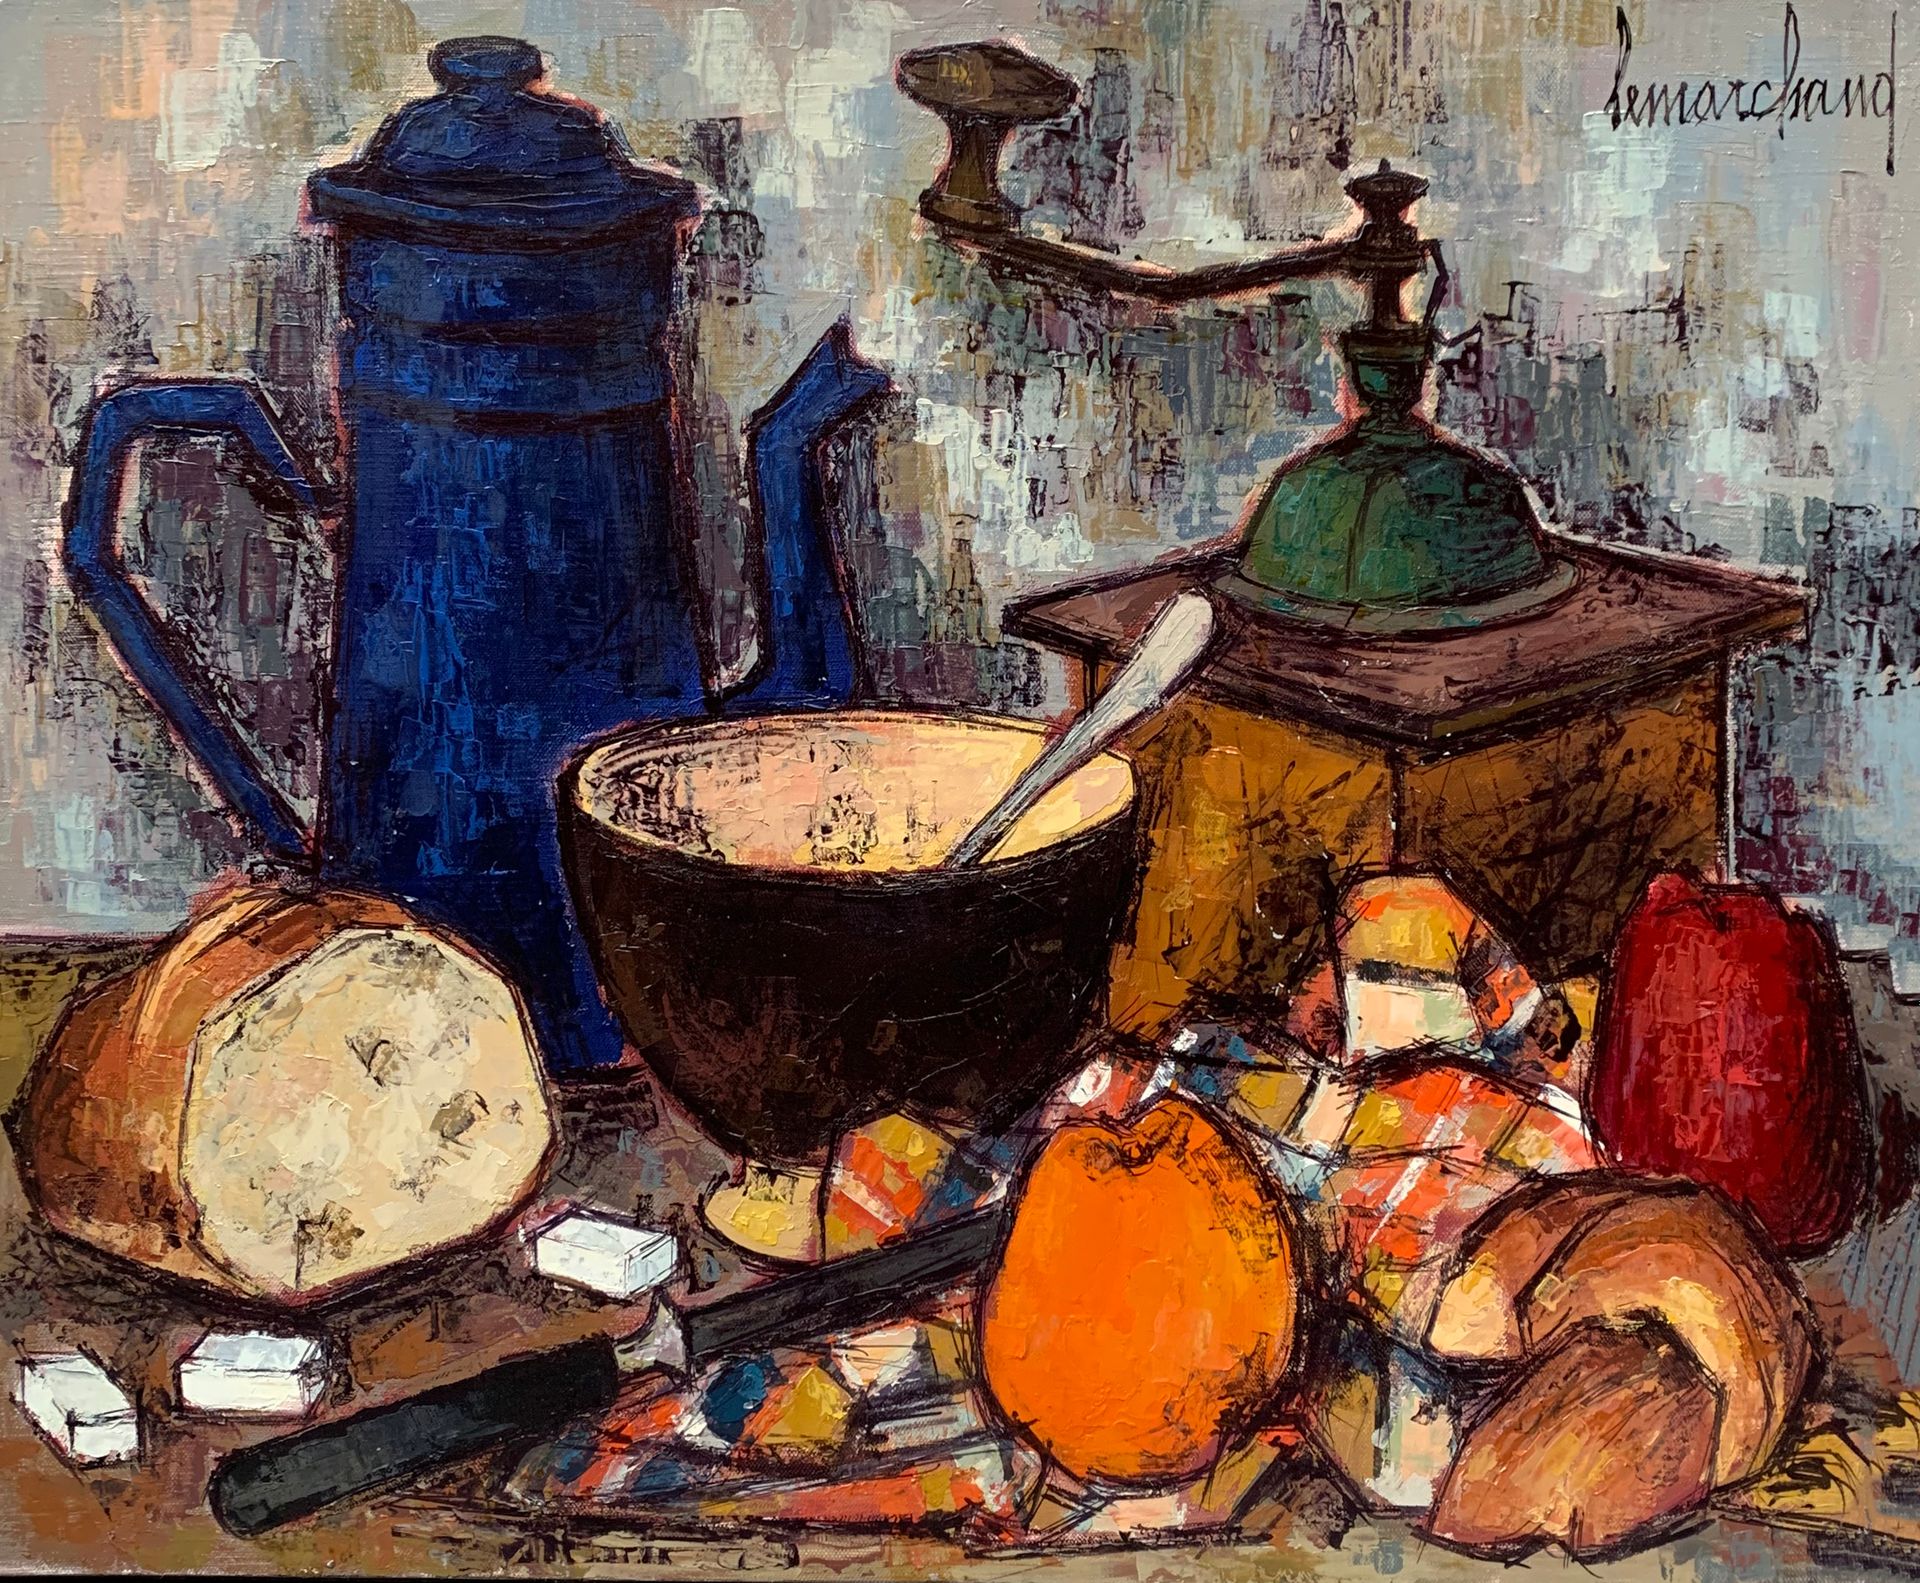 Null 皮埃尔-莱马赫德 (1906-1970)

早餐

布面油画，右上角有签名，框架背面有标题

50 x 61厘米。